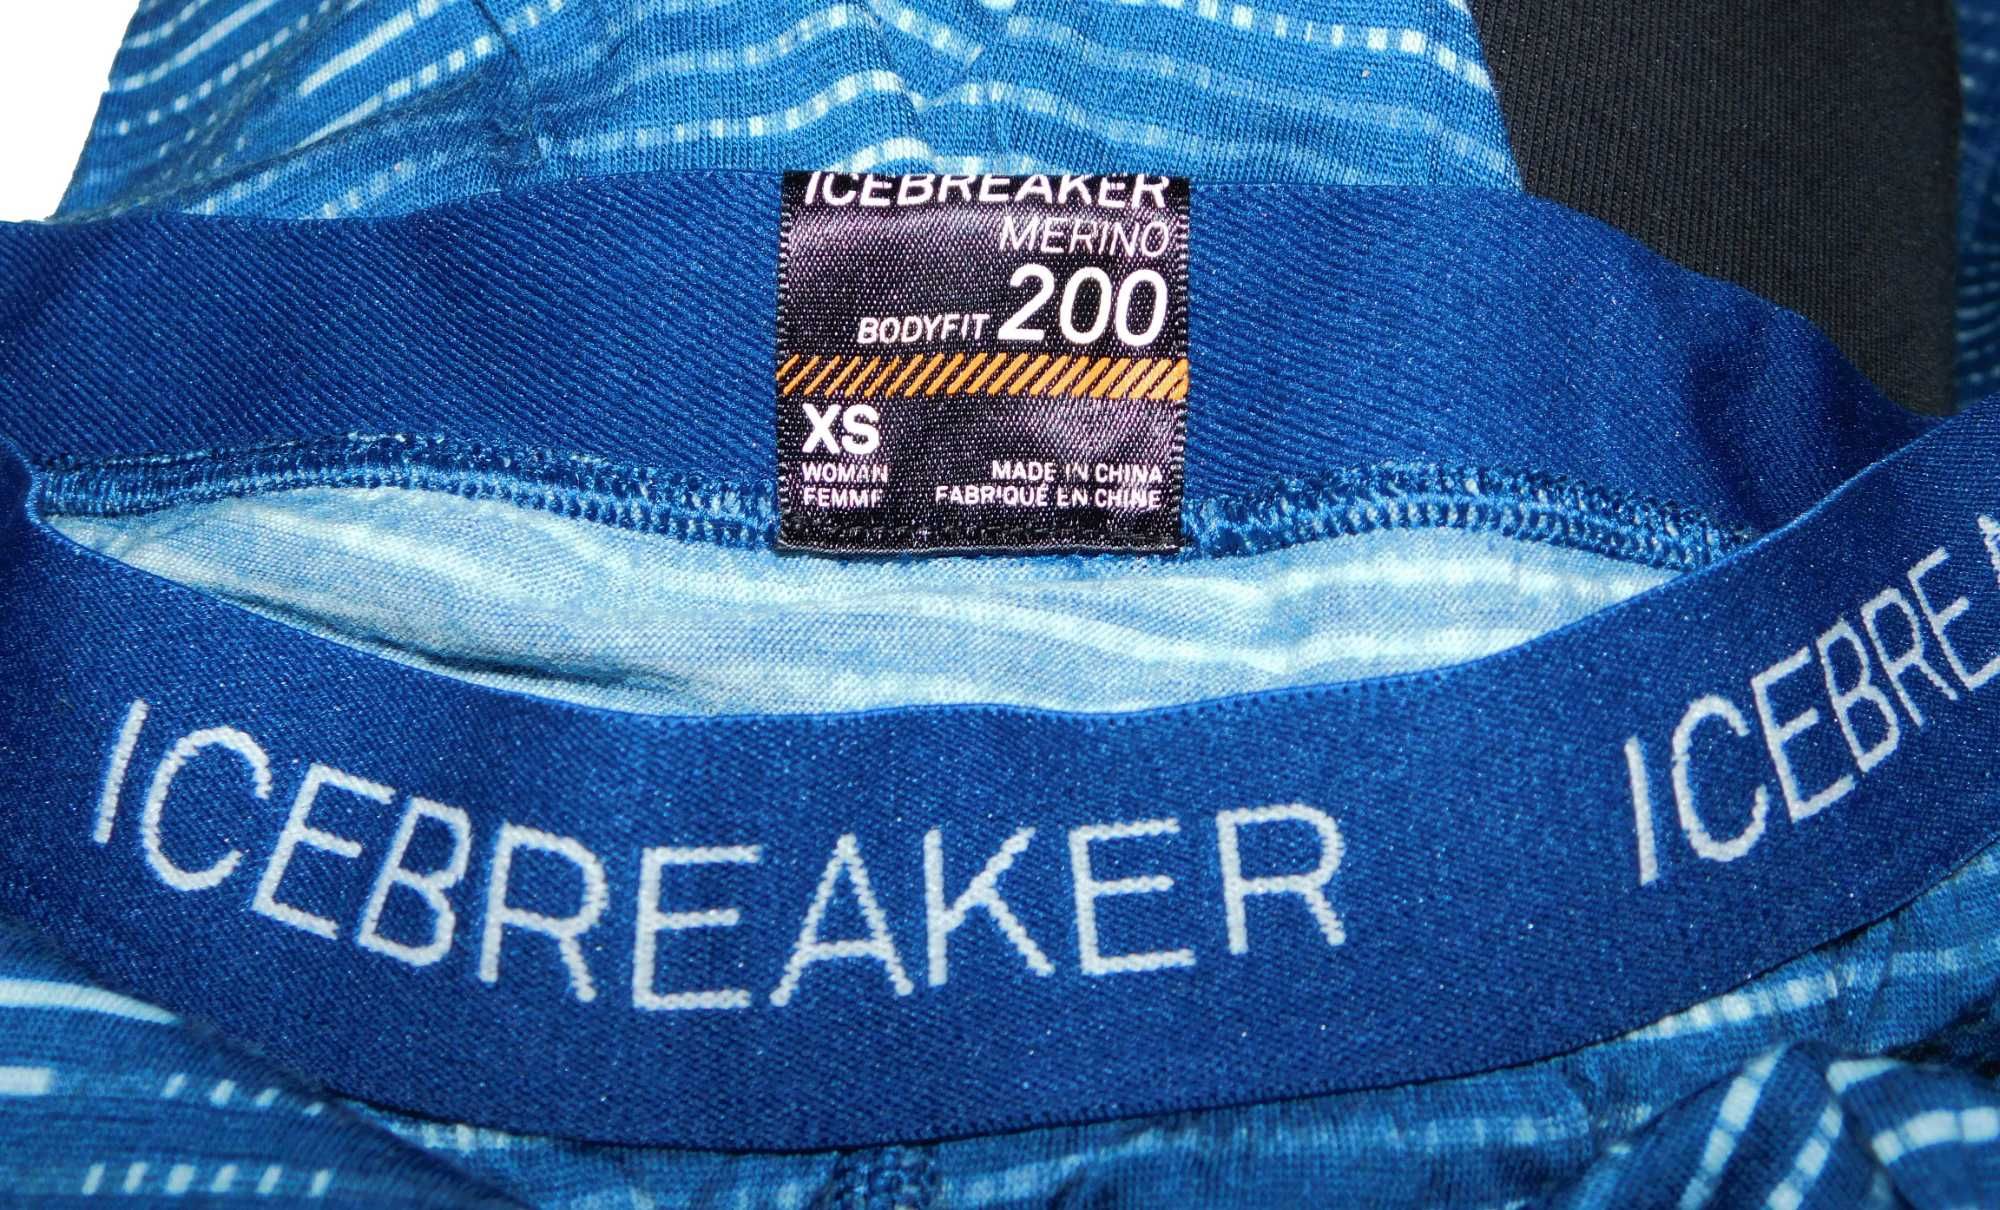 Pantaloni trei sferti Icebreaker Merino Bodyfit 200 dama XS